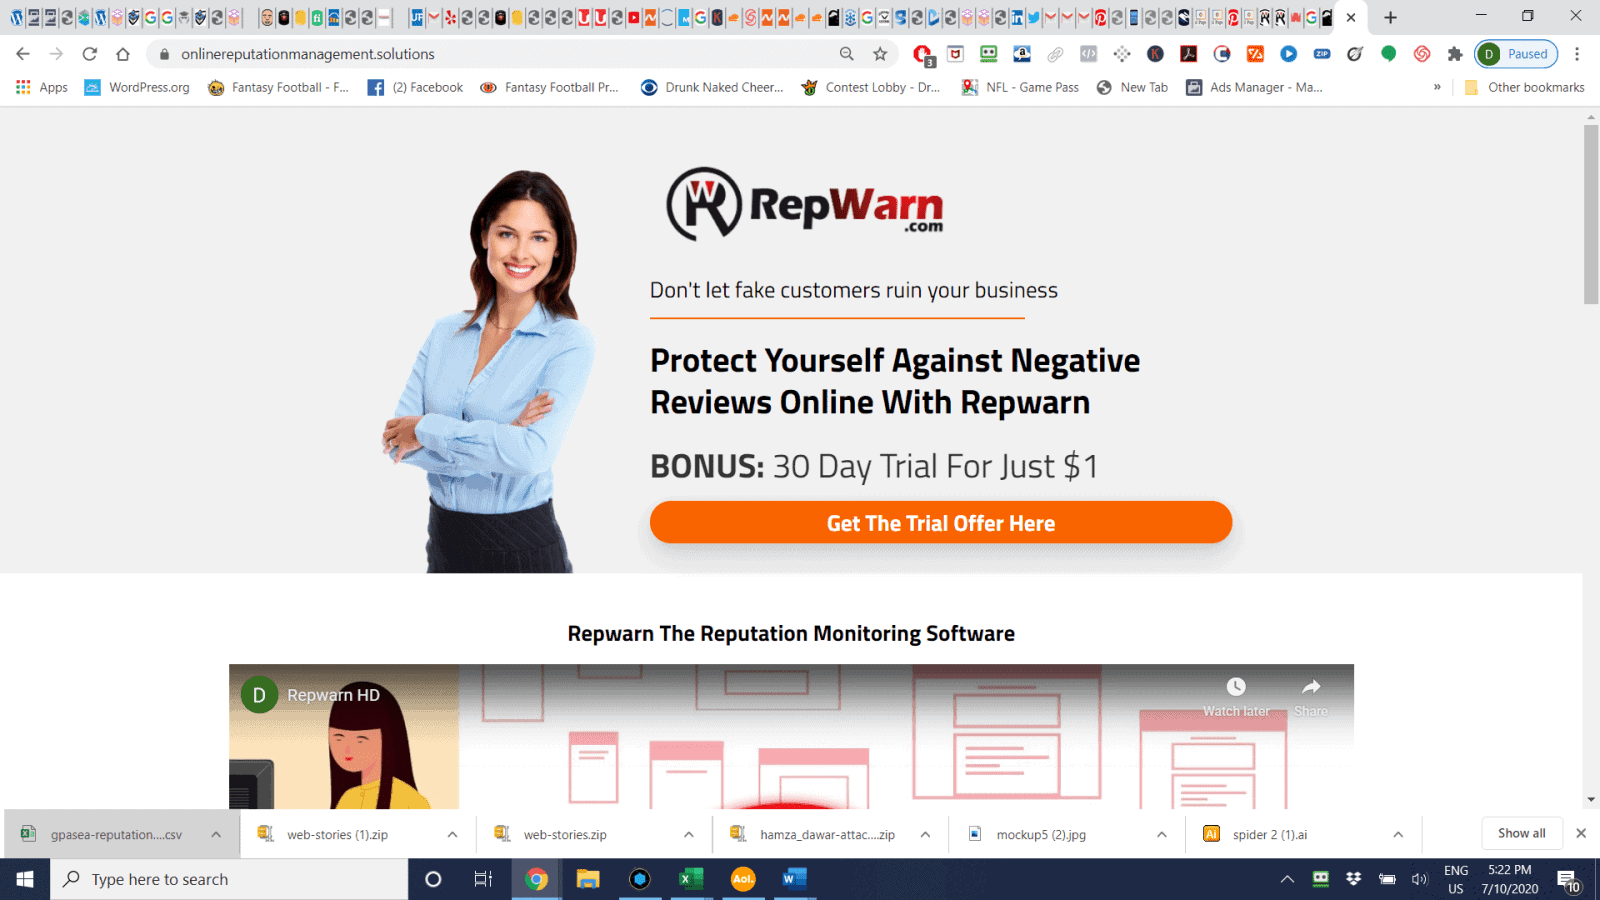 repwarn online reputation management solutions